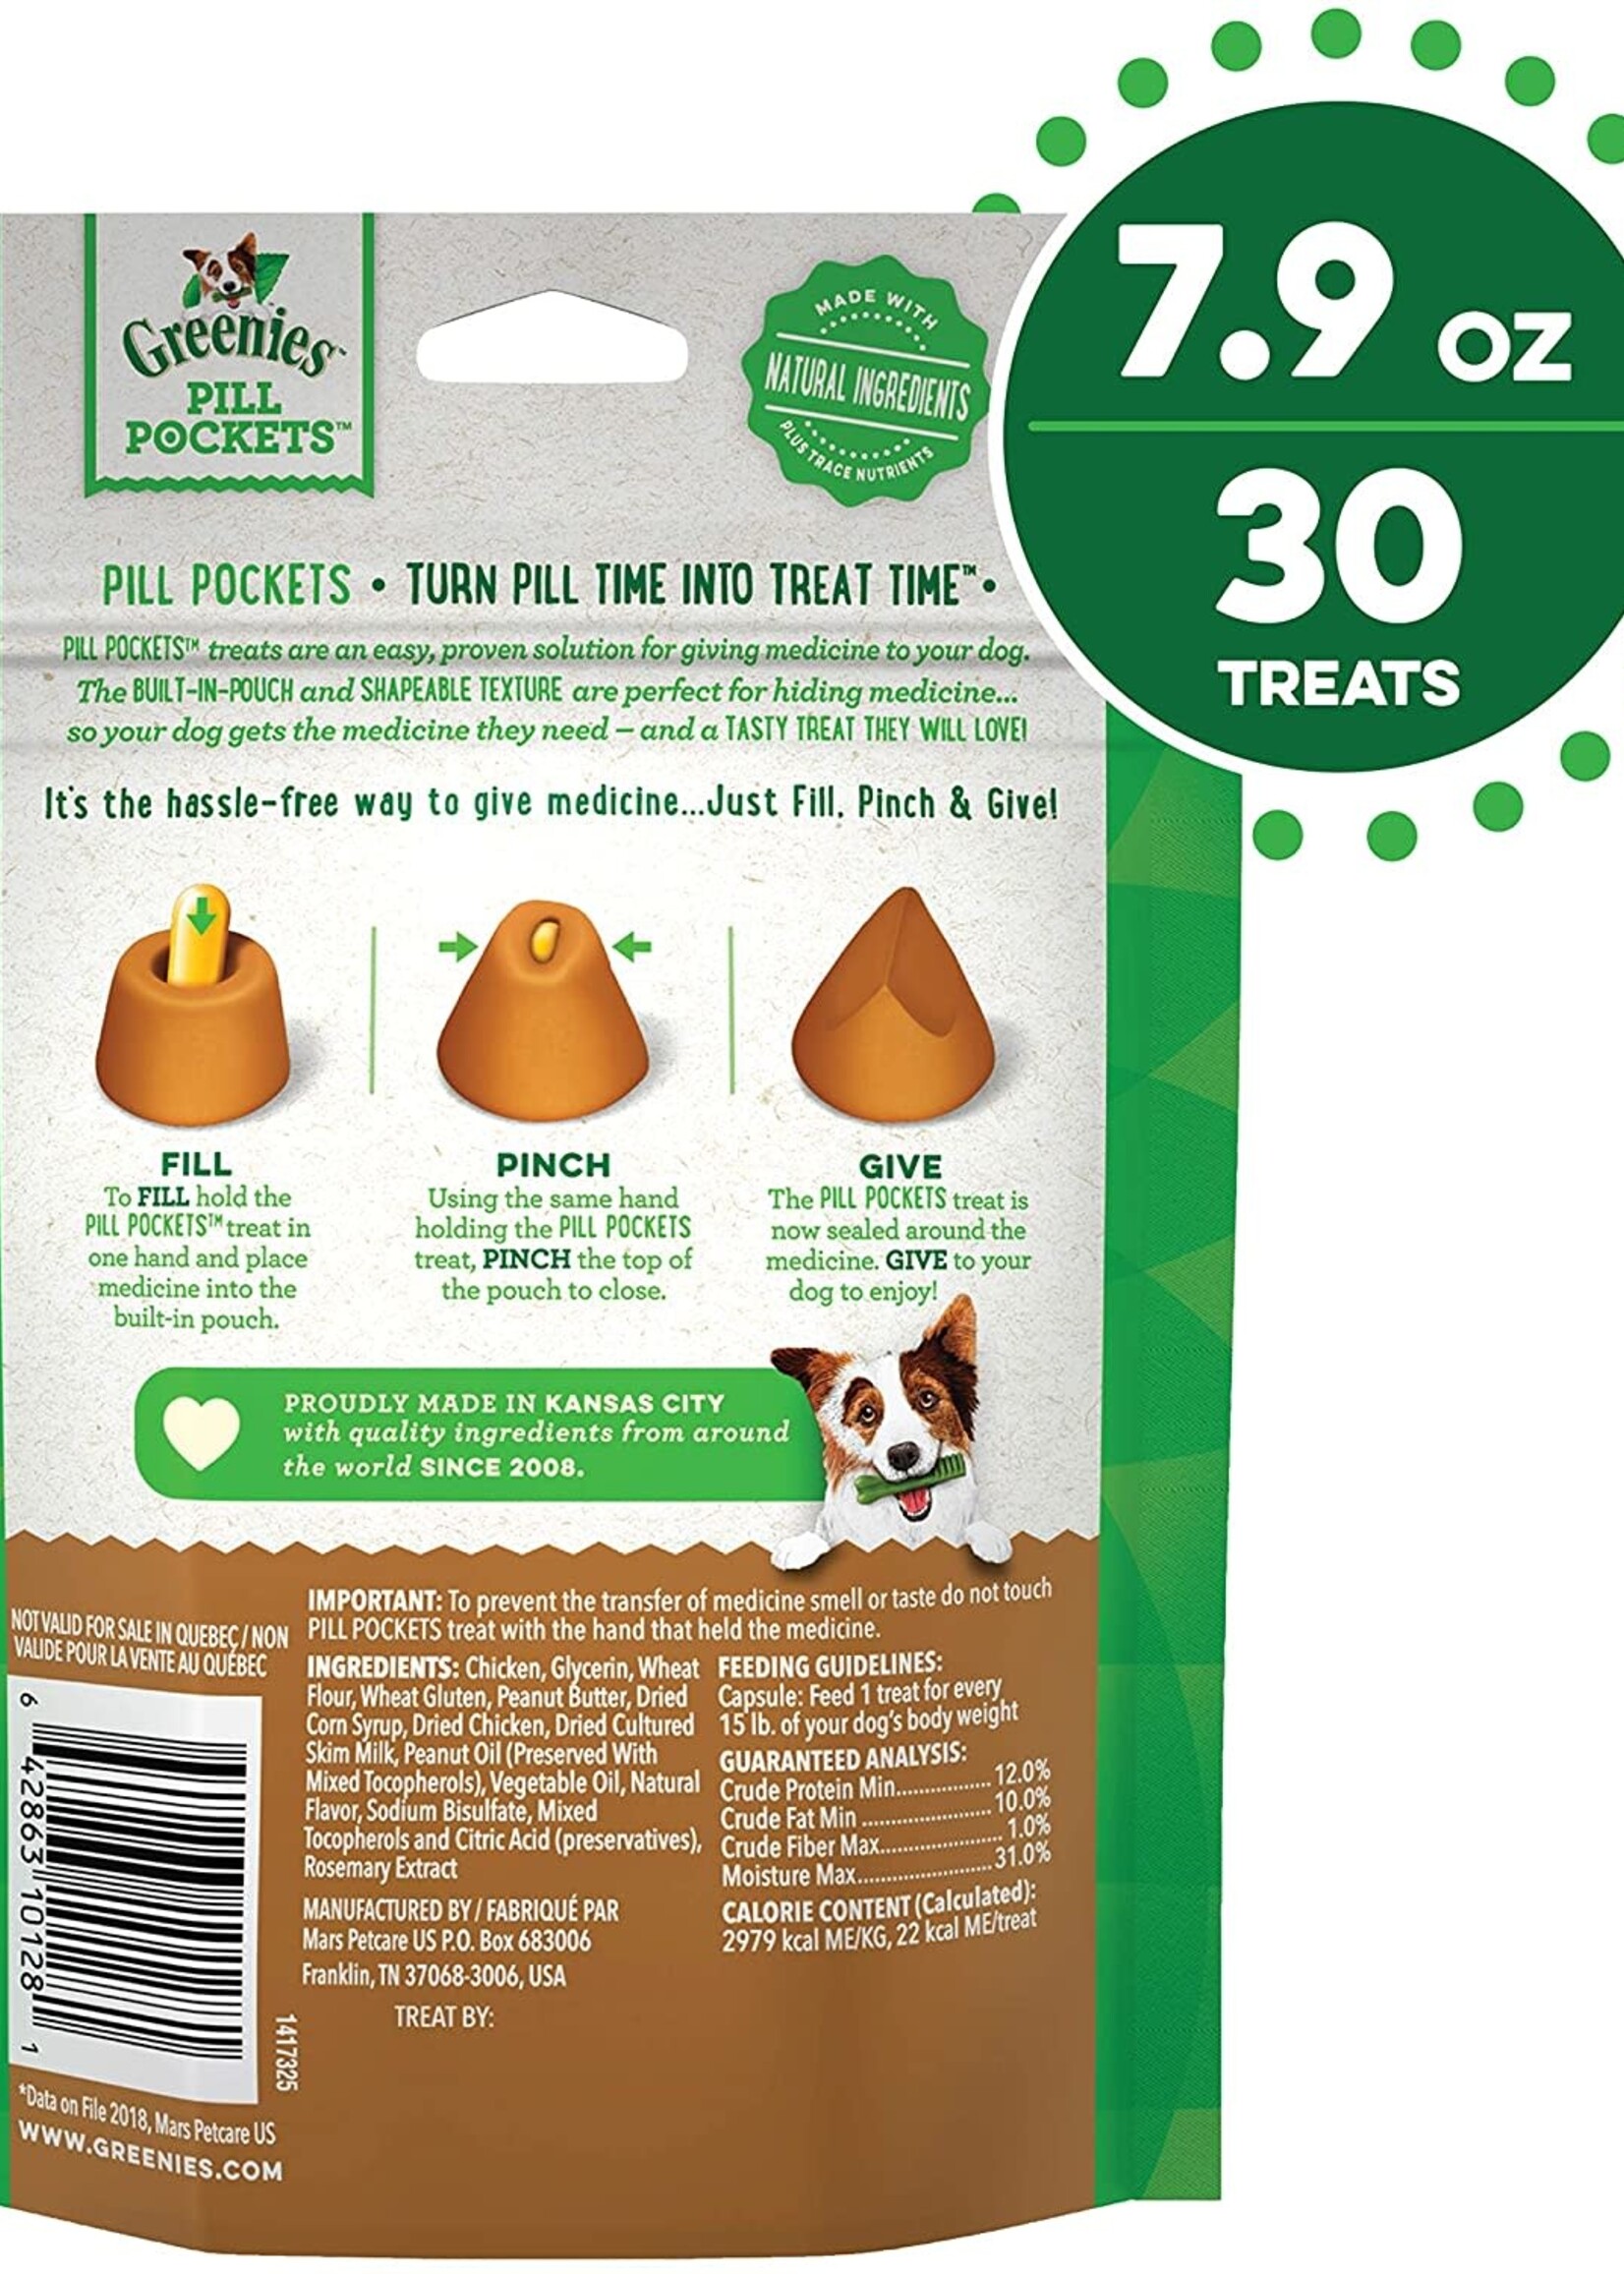 GREENIES GREENIES Pill Pockets Capsule Size Peanut Butter Flavor Dog Treats 7.9-oz